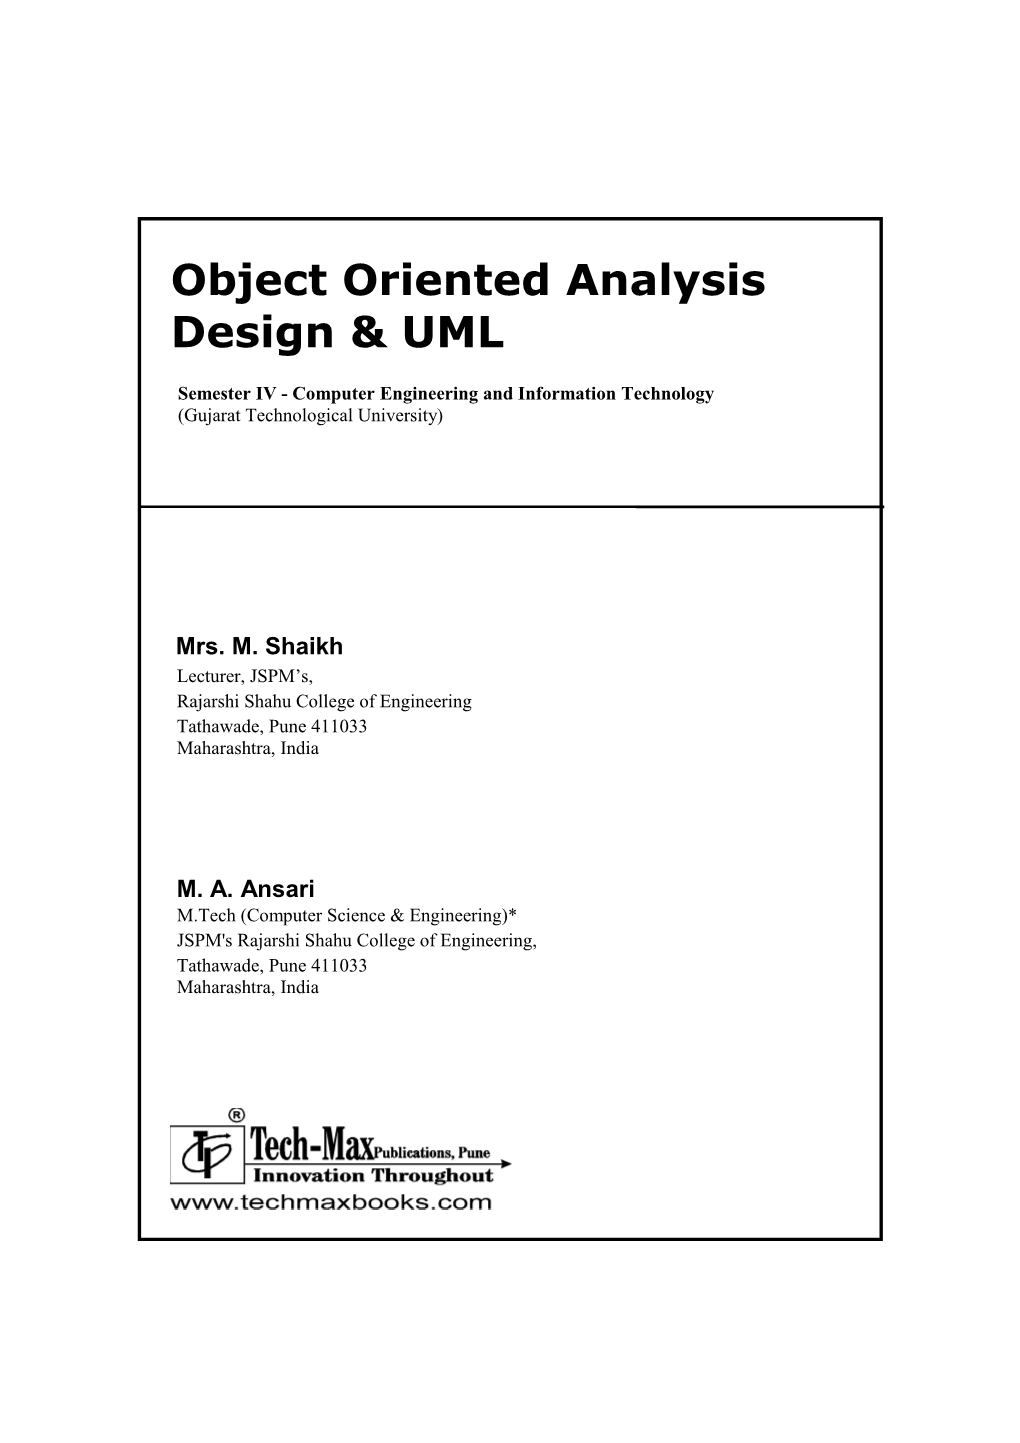 Object Oriented Analysis Design & UML